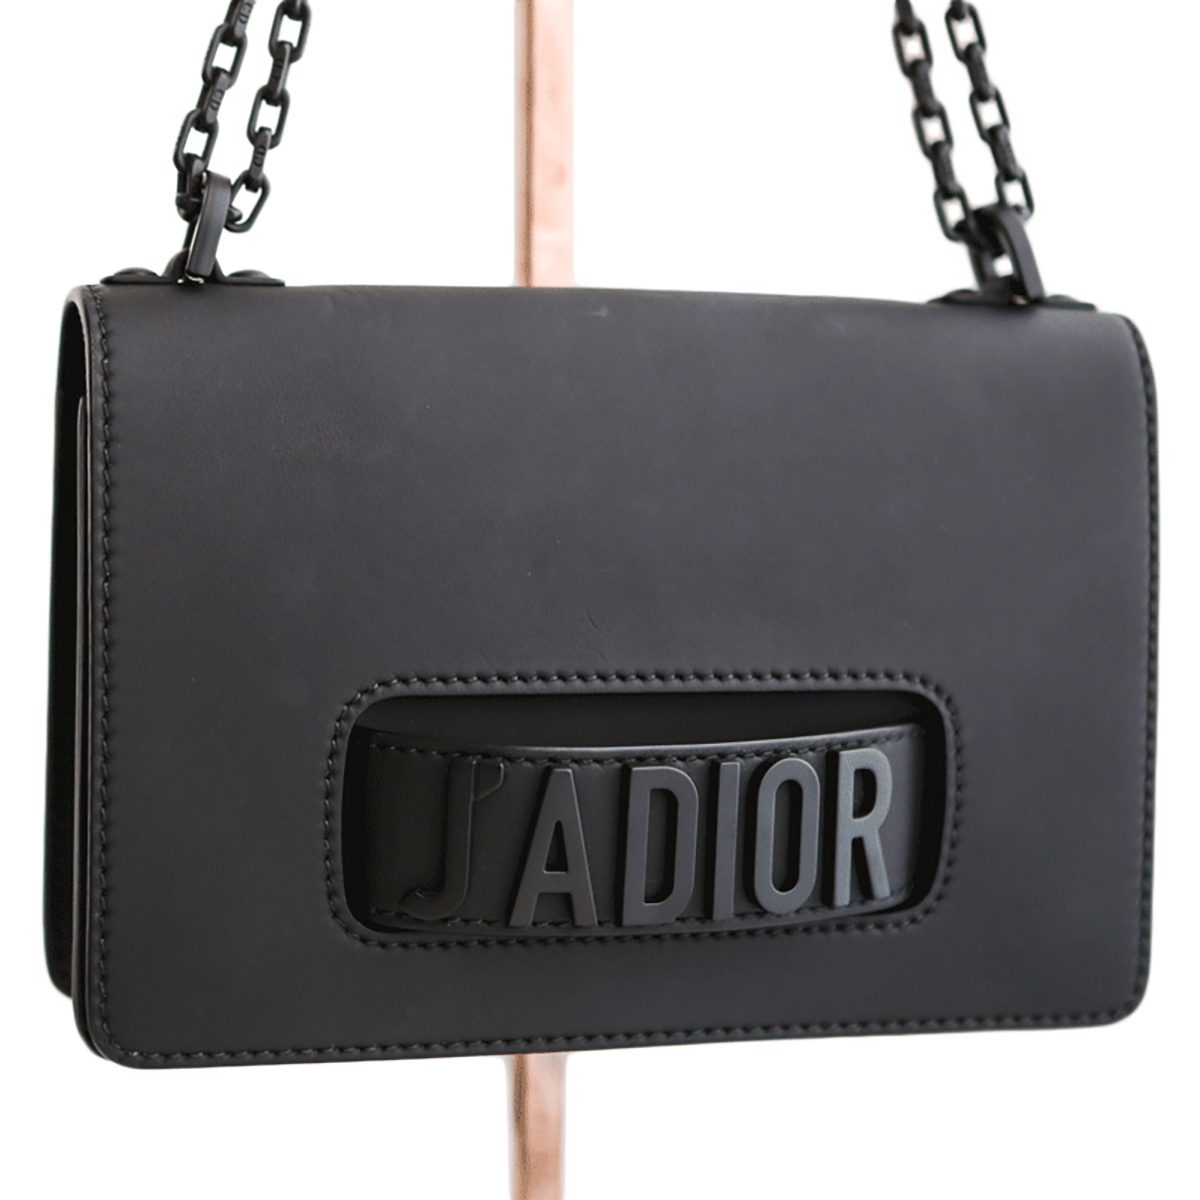 J'adior leather handbag Dior White in Leather - 39640814